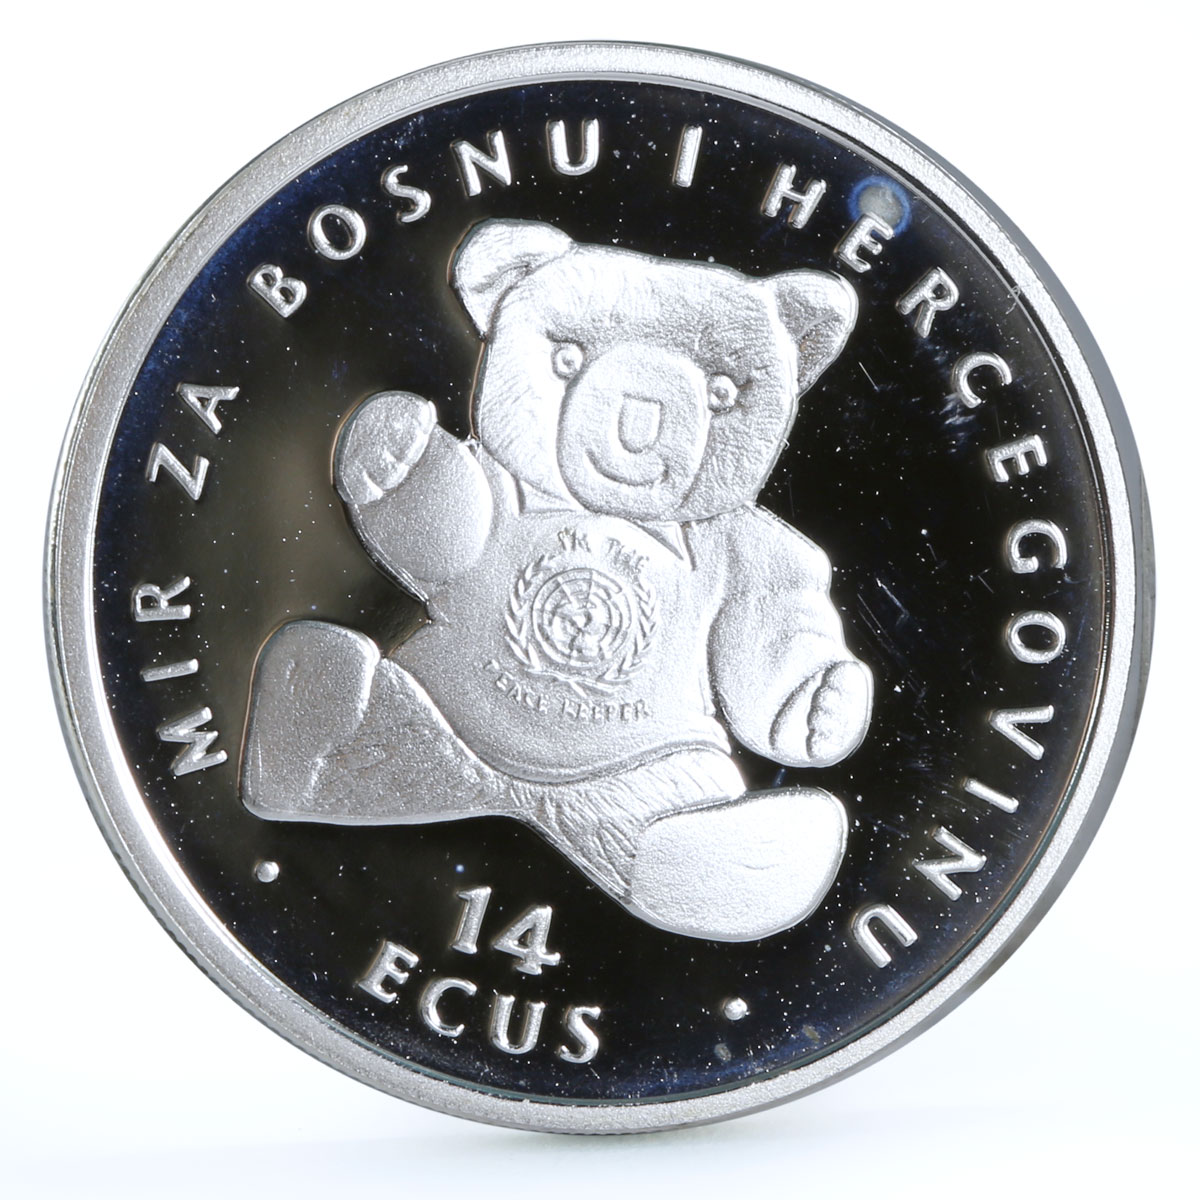 Bosnia and Herzegovina 14 ecu UN Peace Teddy Bear Toy proof silver coin 1994